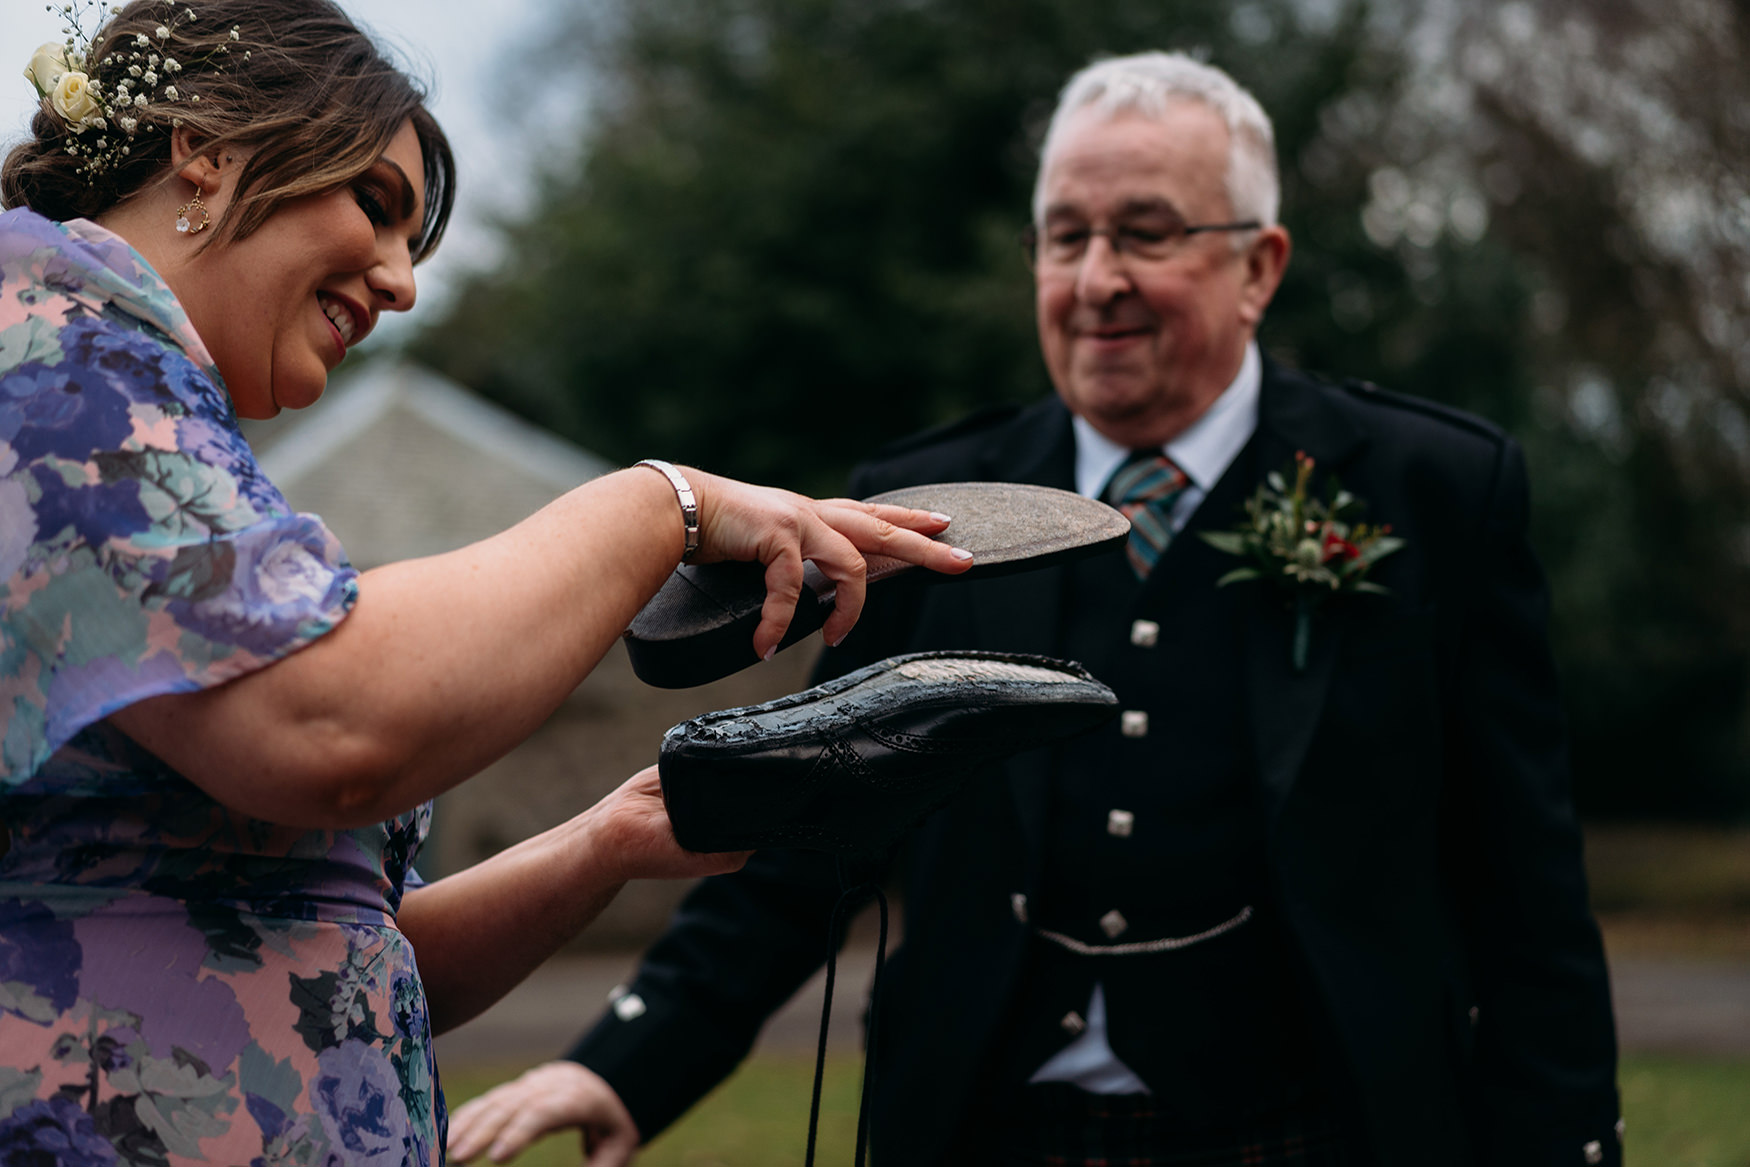 broken kilt shoe on wedding day needing an wedding day emergency kit